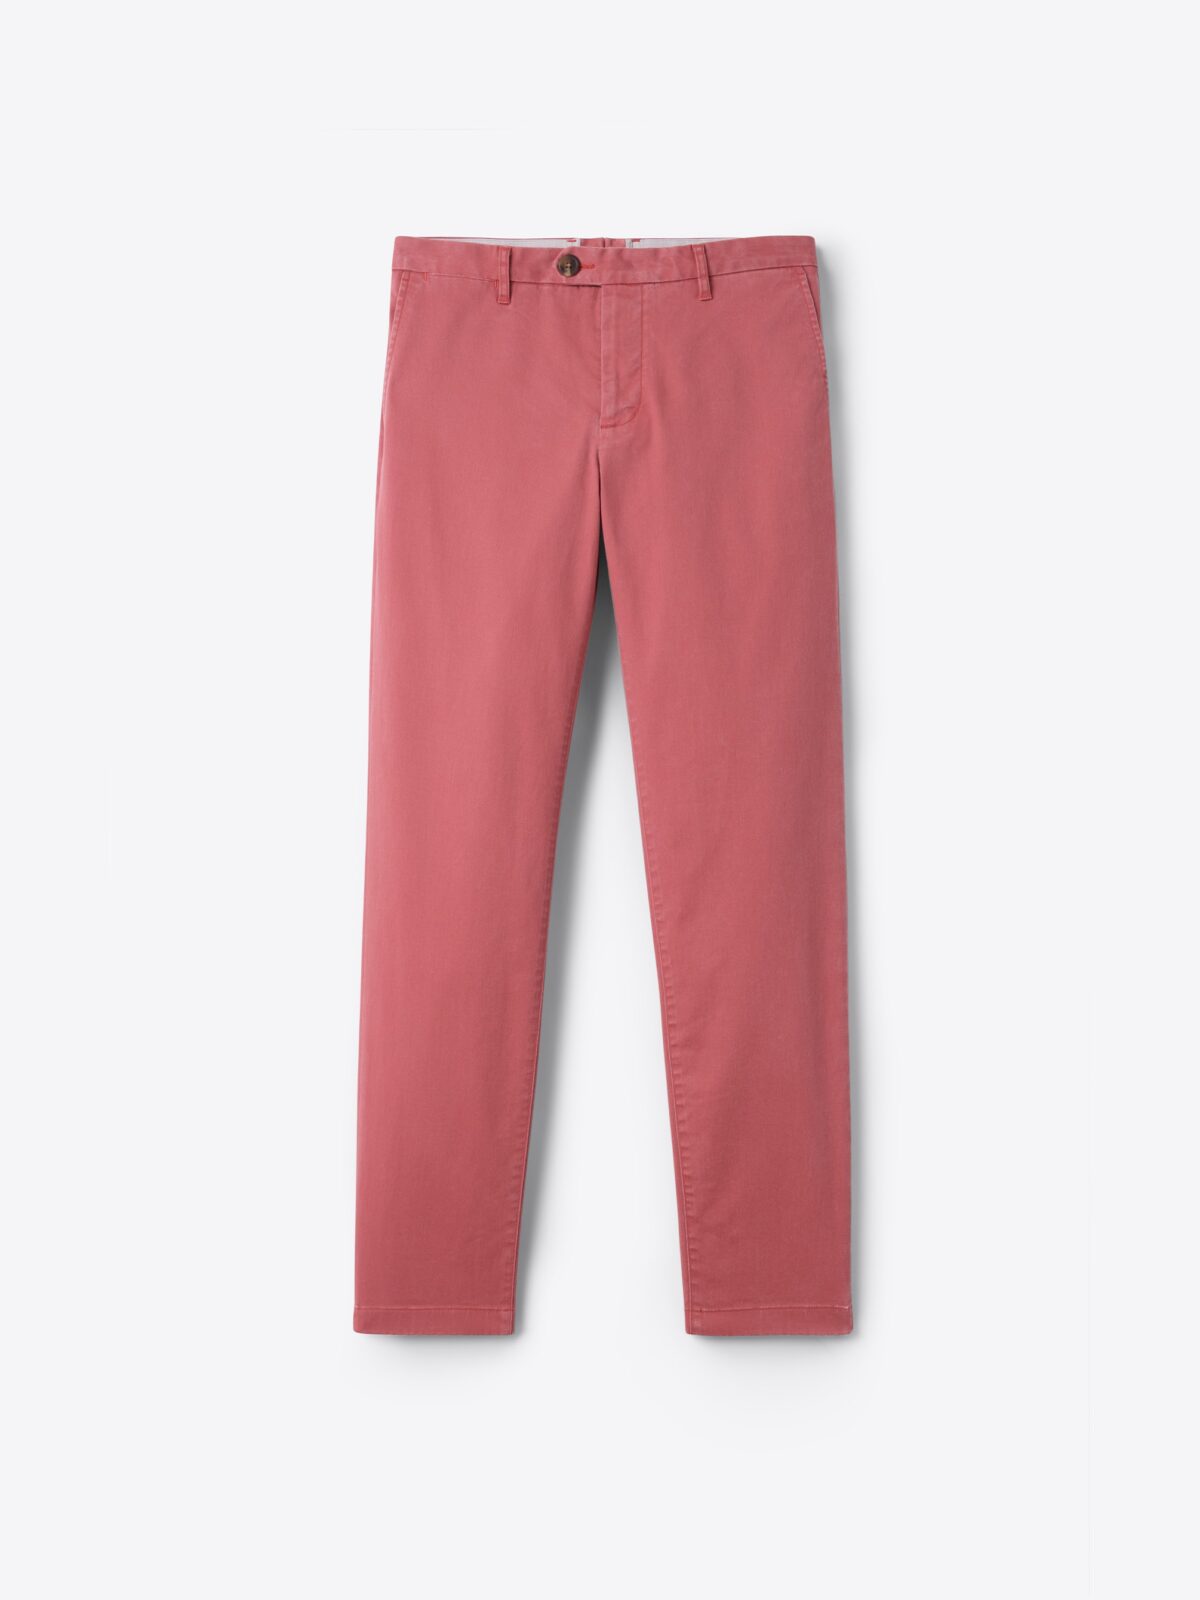 Prato Red Delave Stretch Cotton Chino - Custom Fit Pants